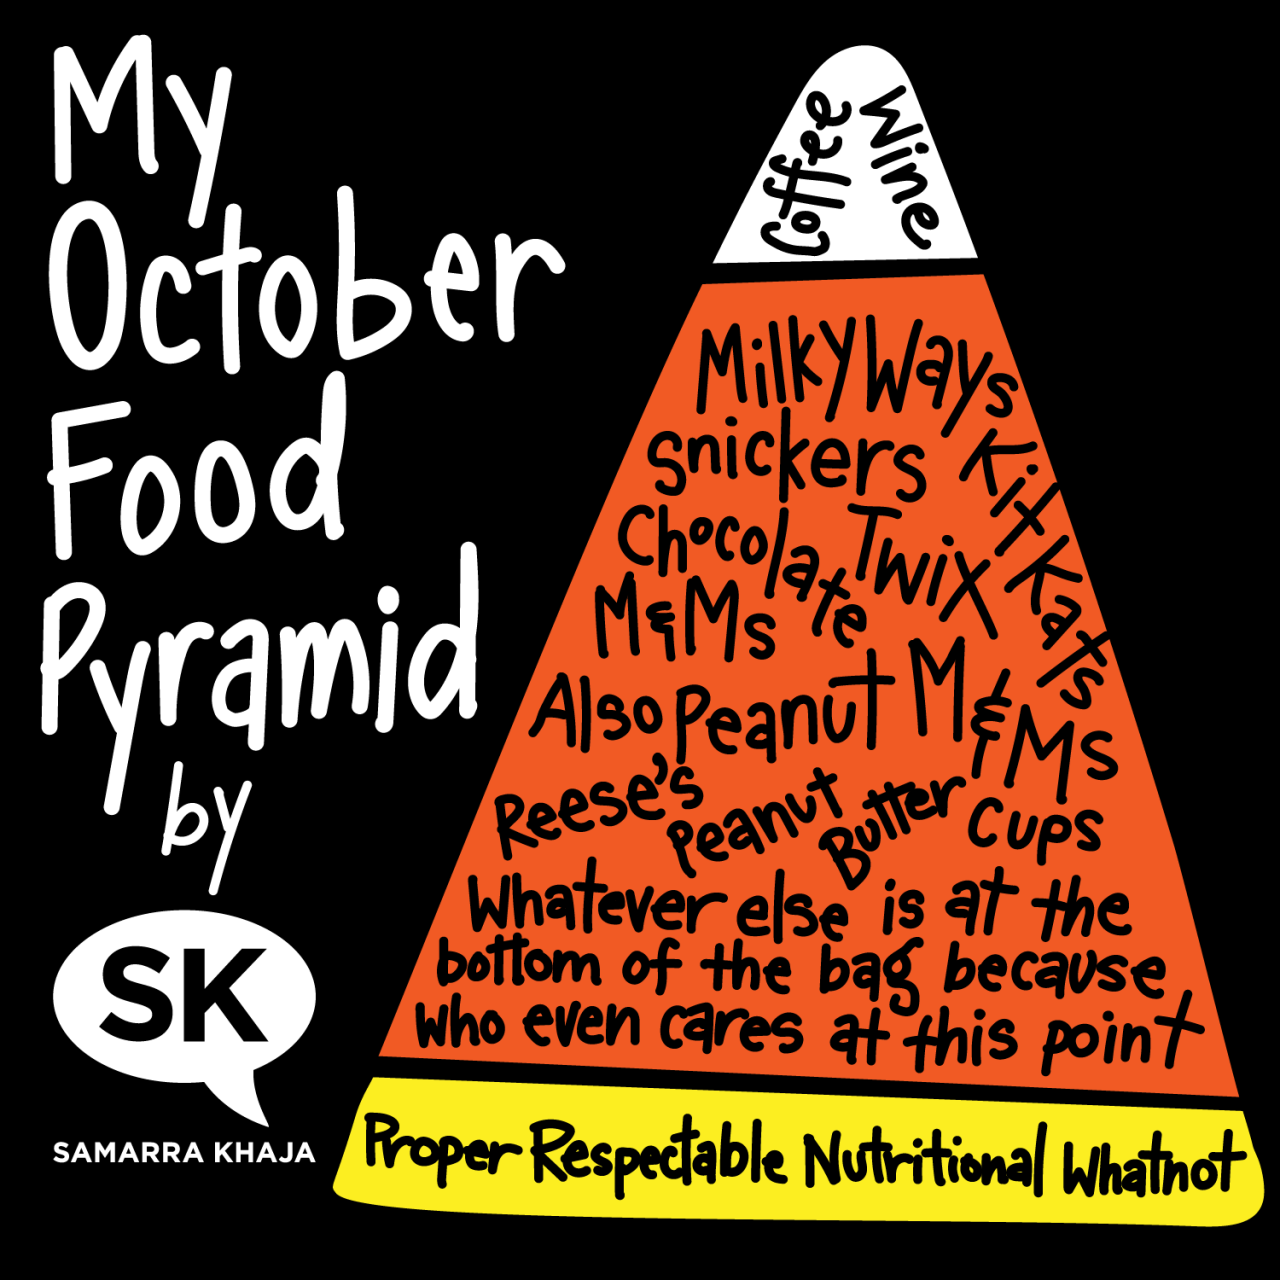 My October Food Pyramid*